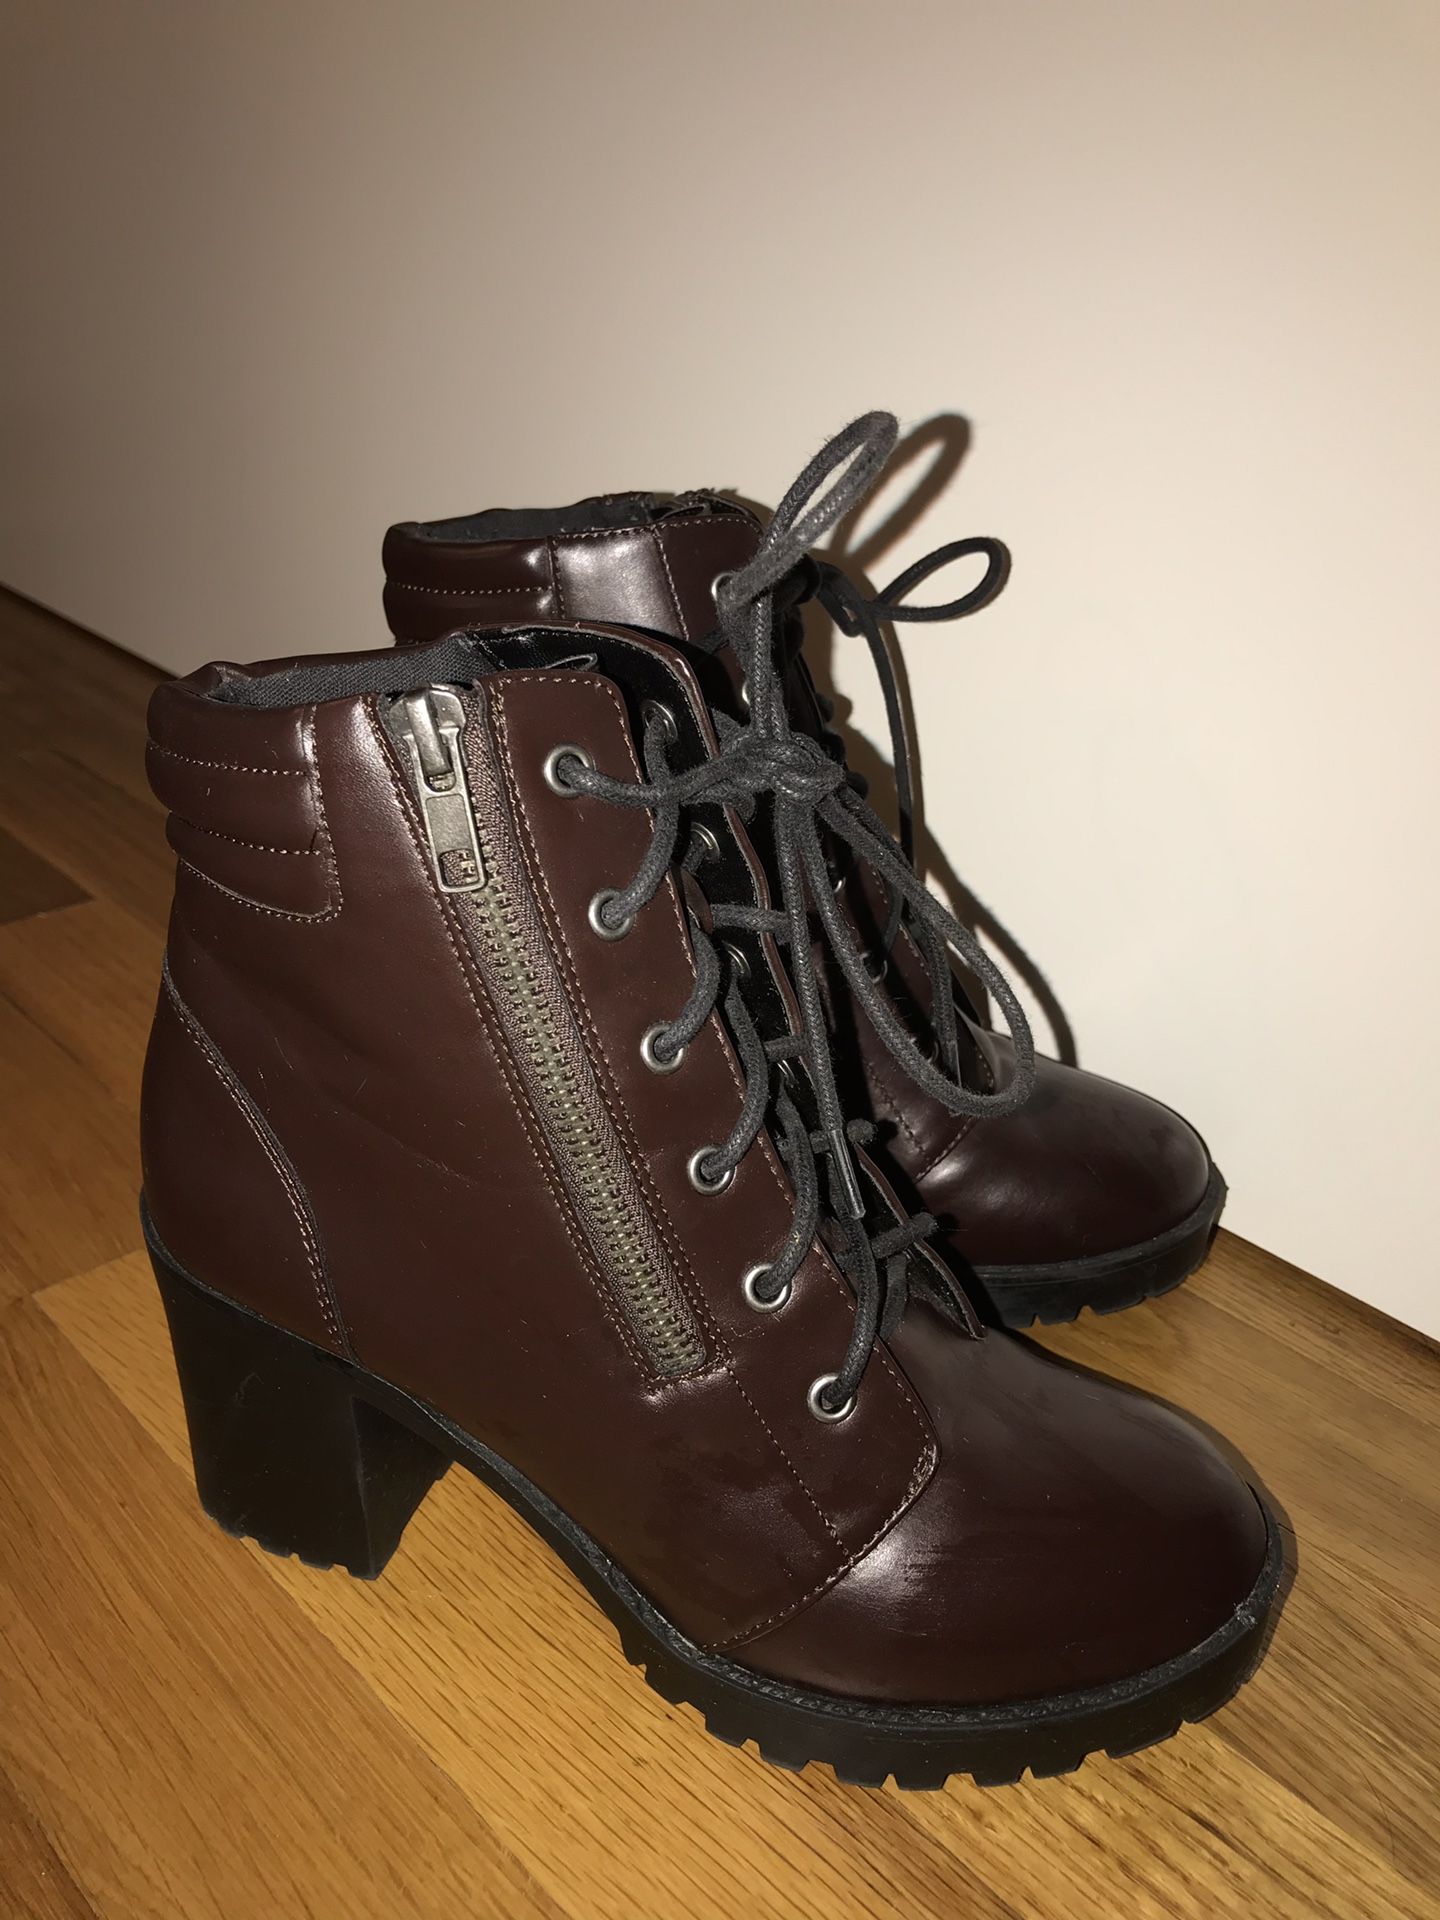 Maroon heeled boots size 6 women’s